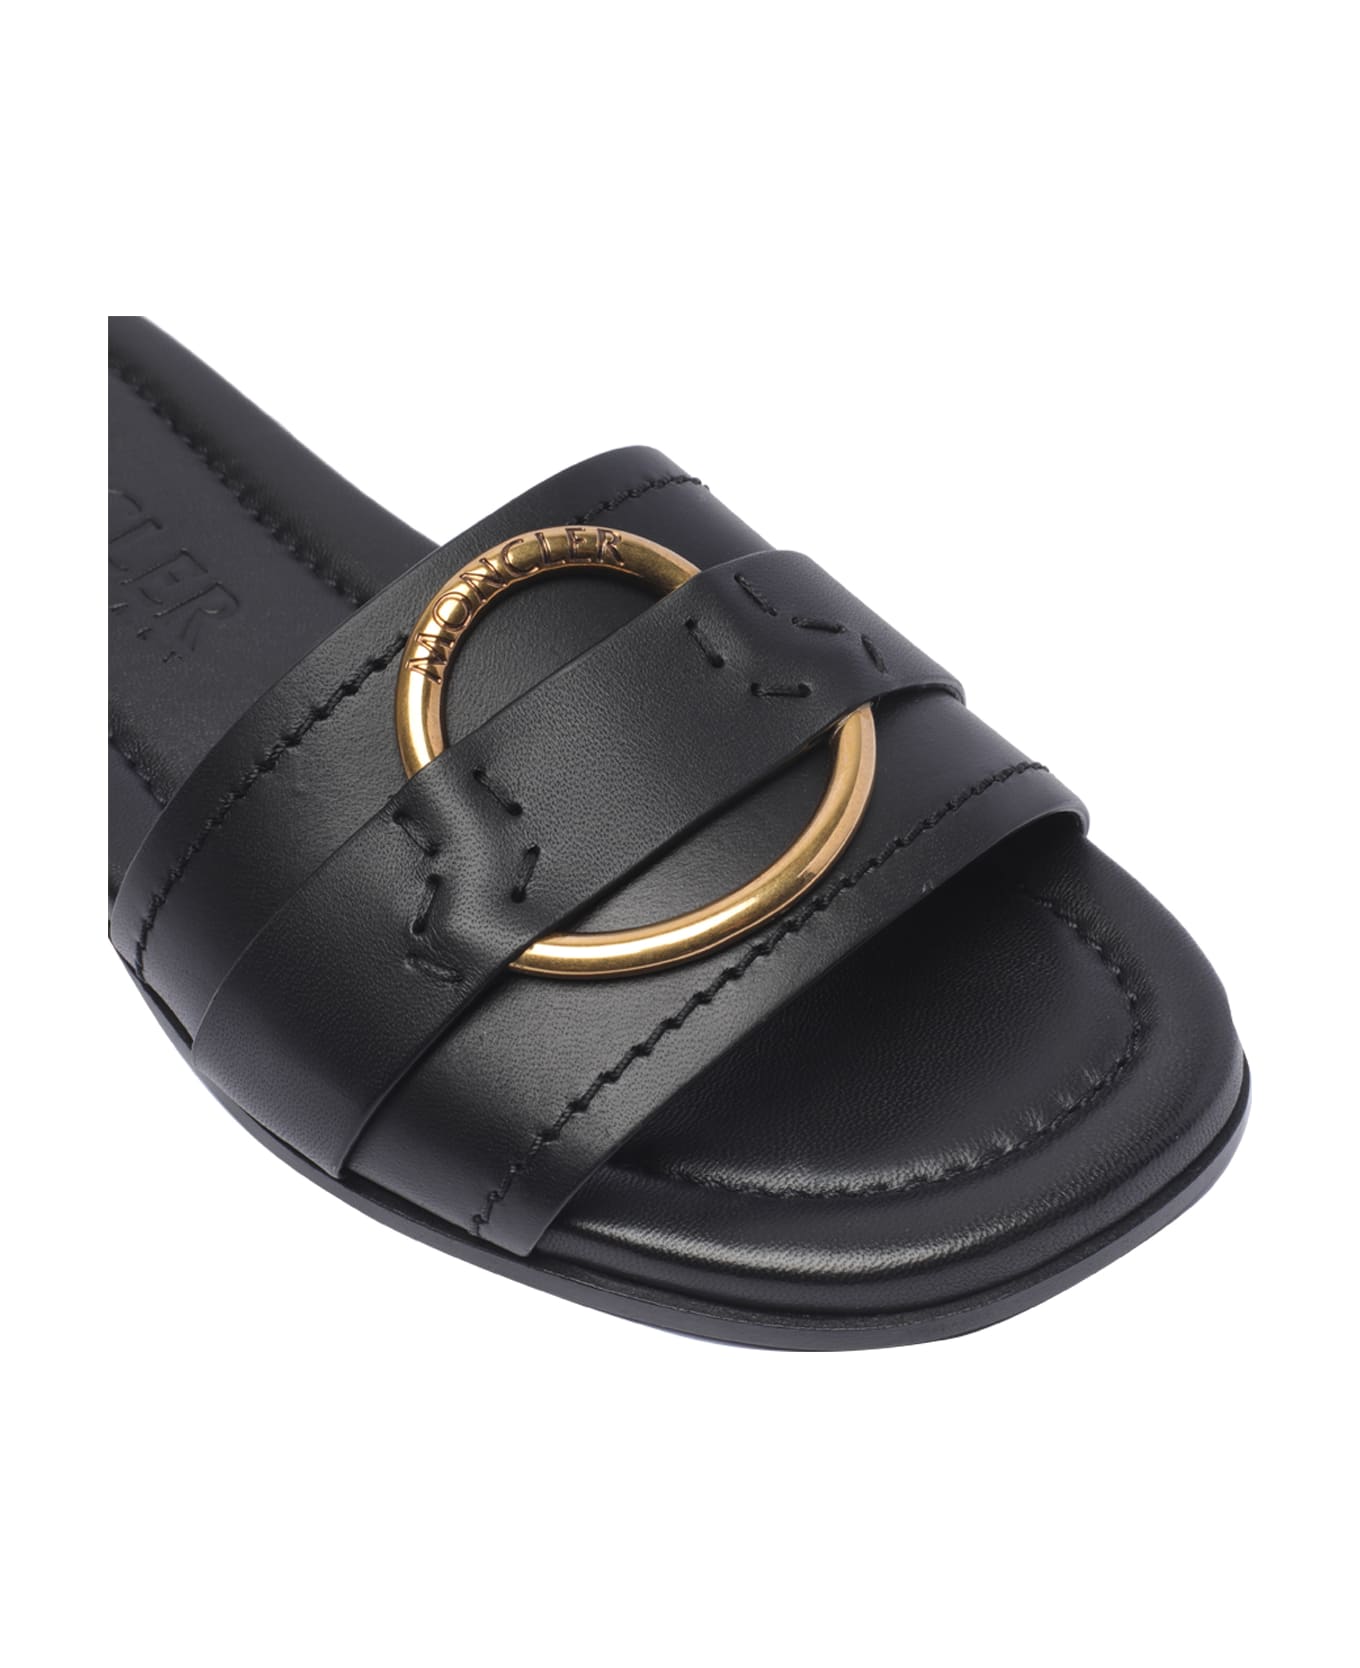 Moncler Bell Slide Sandals - Black サンダル